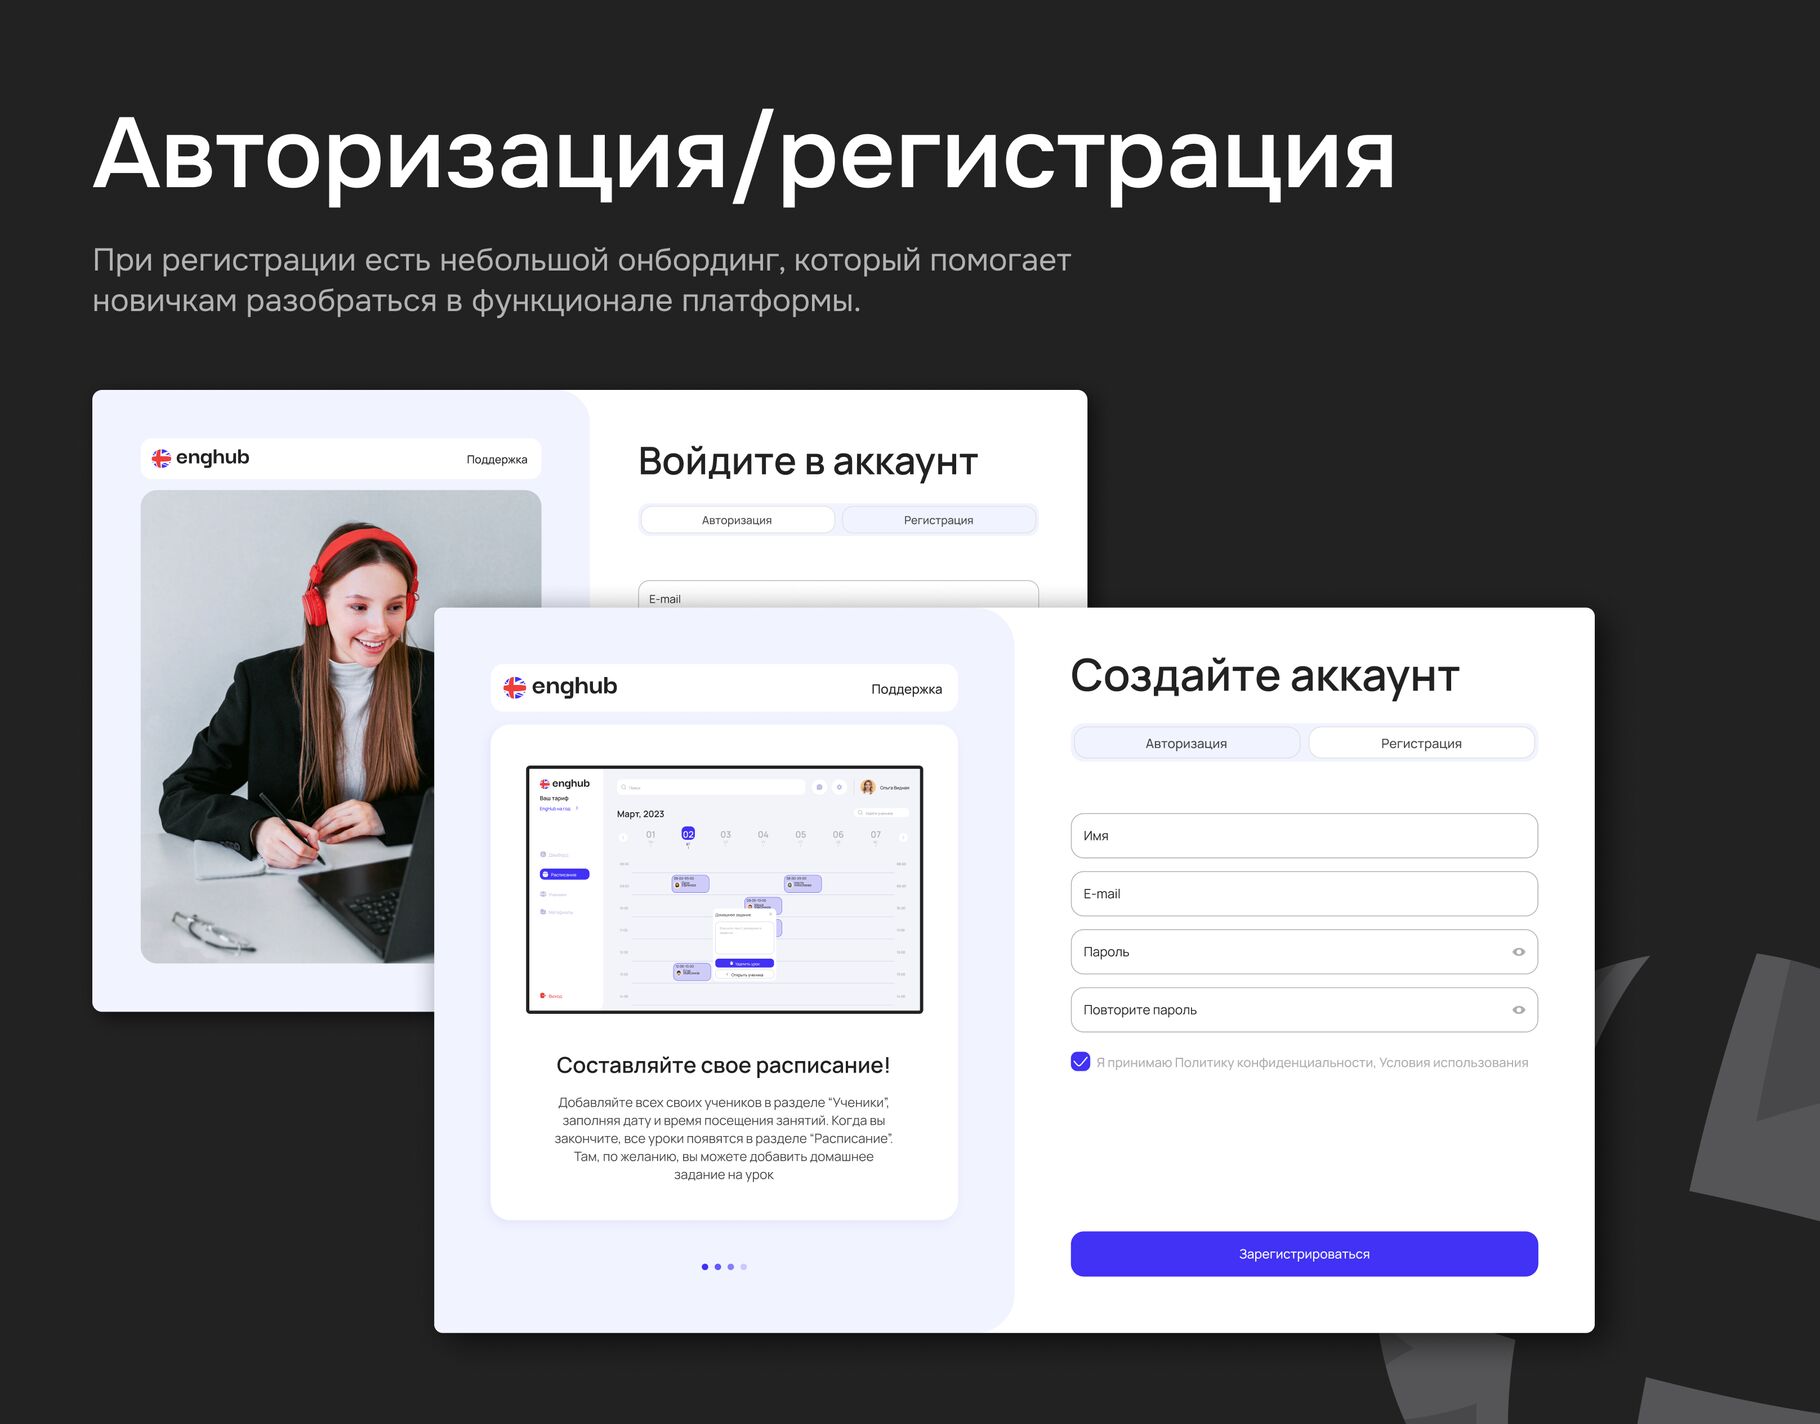 Разработка веб-дизайна за 200 000 руб.